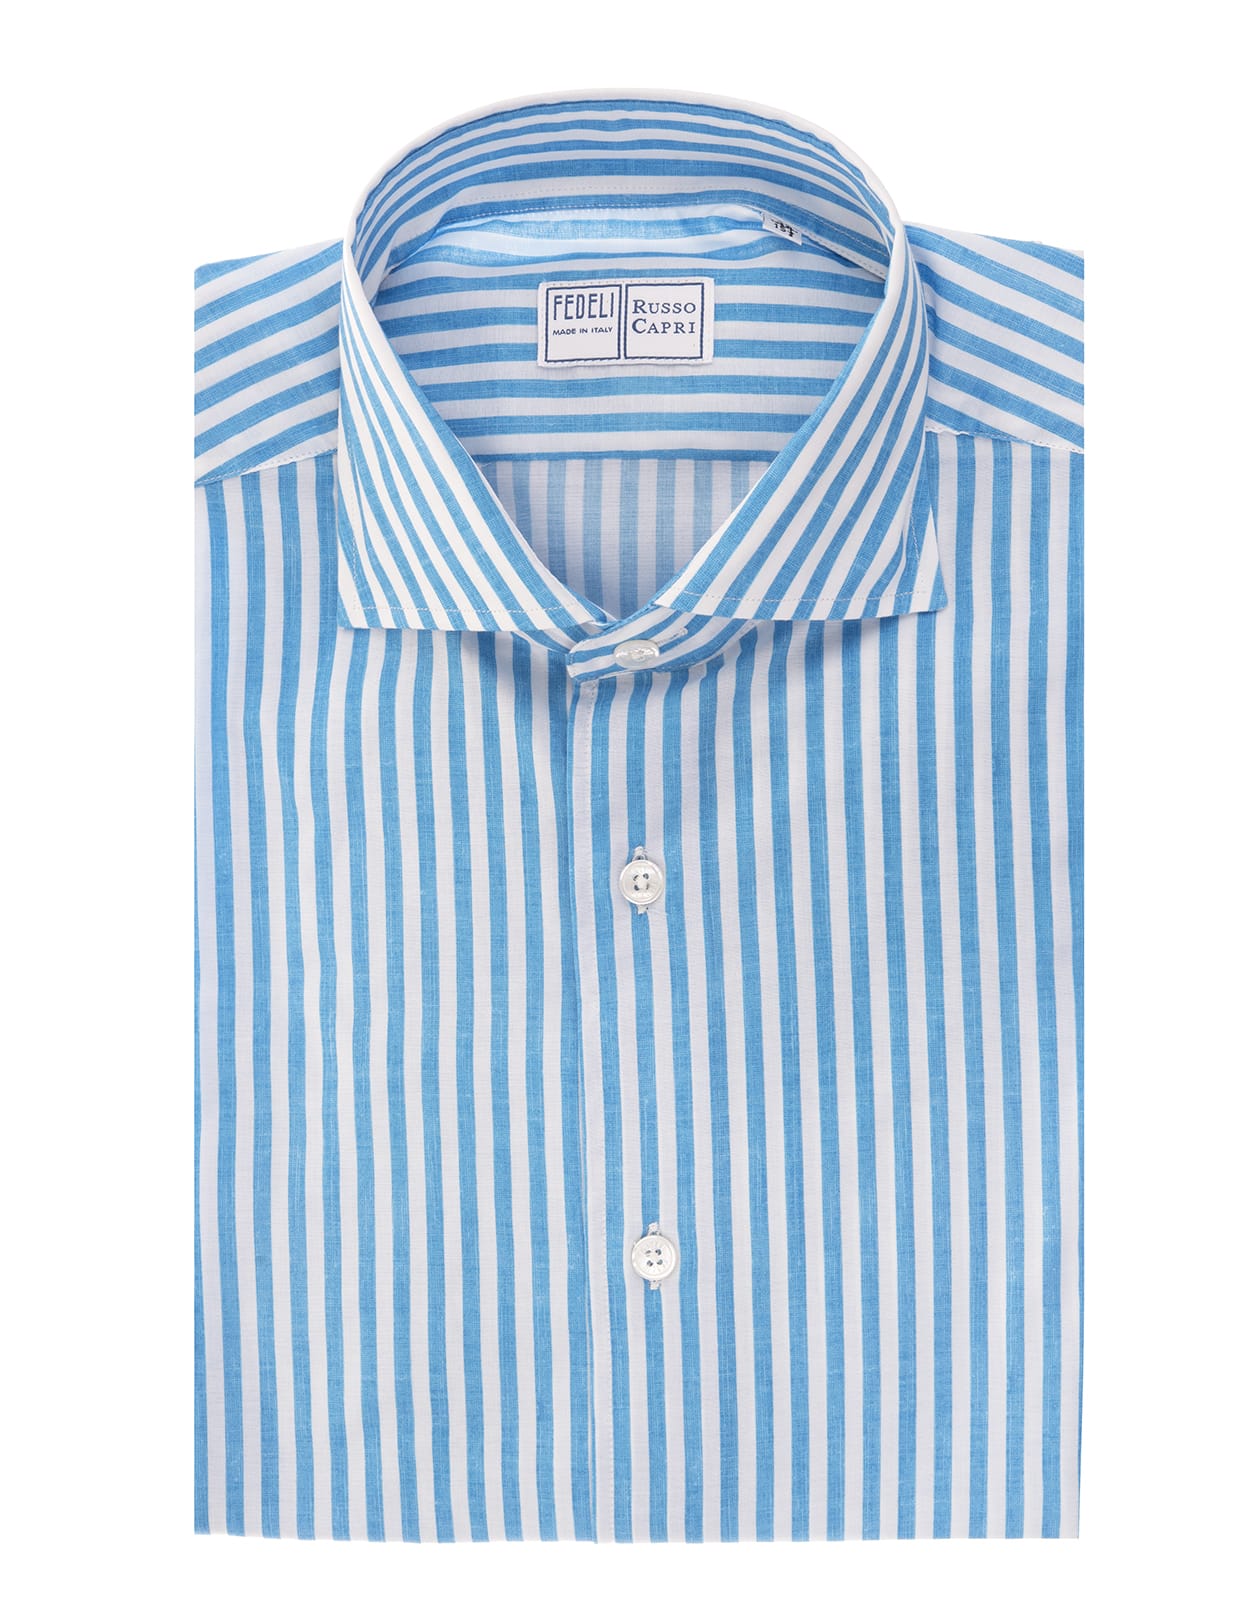 Fedeli White And Light Blue Striped Cotton Shirt